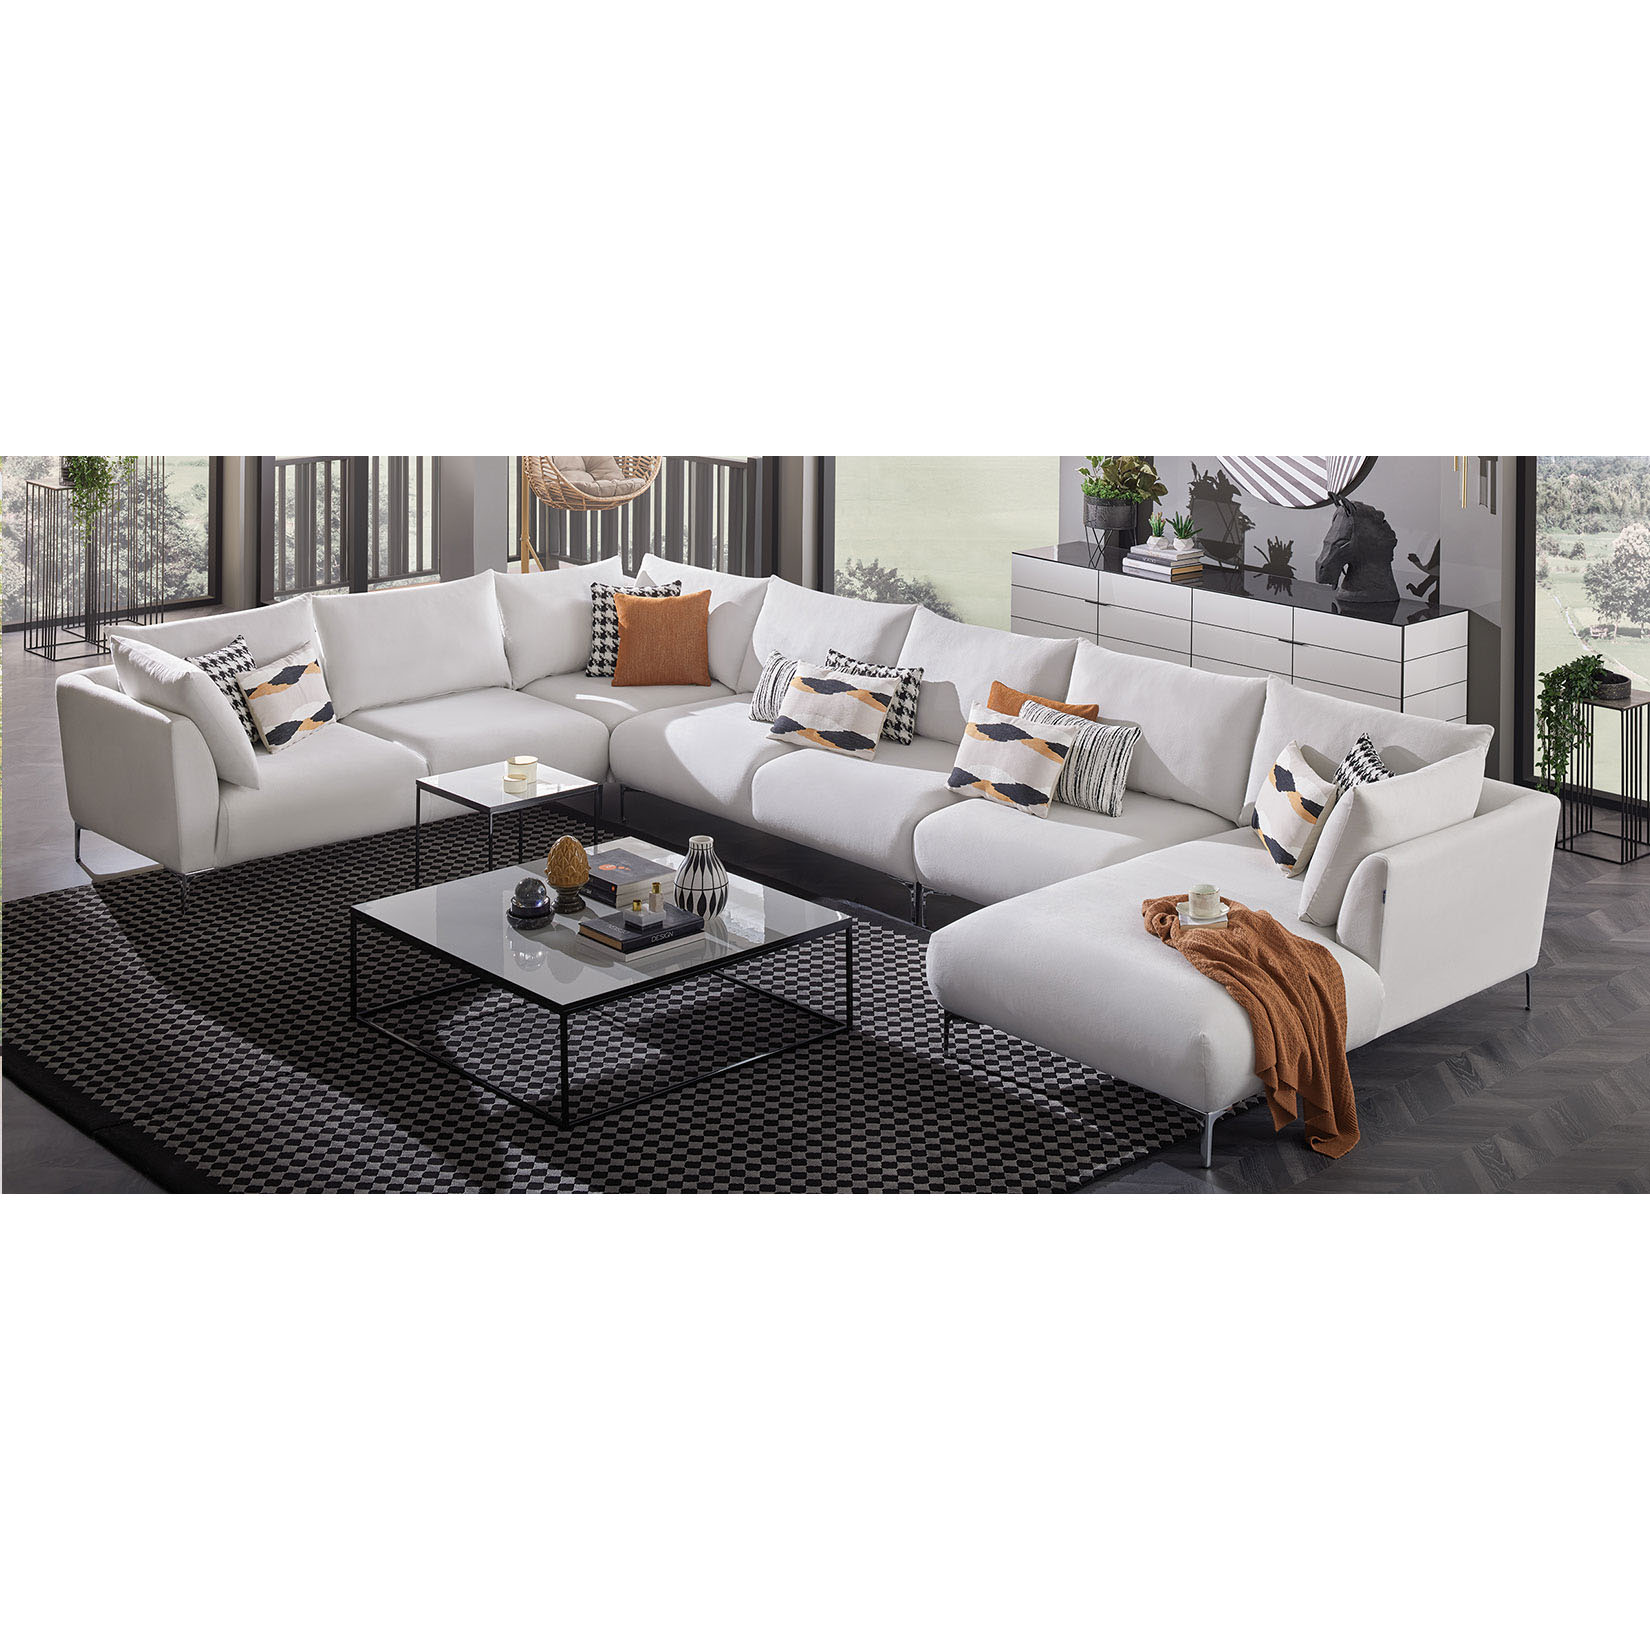 Модуль дивана Enza Home Mayfair, одноместный, размер 87x98x80 см